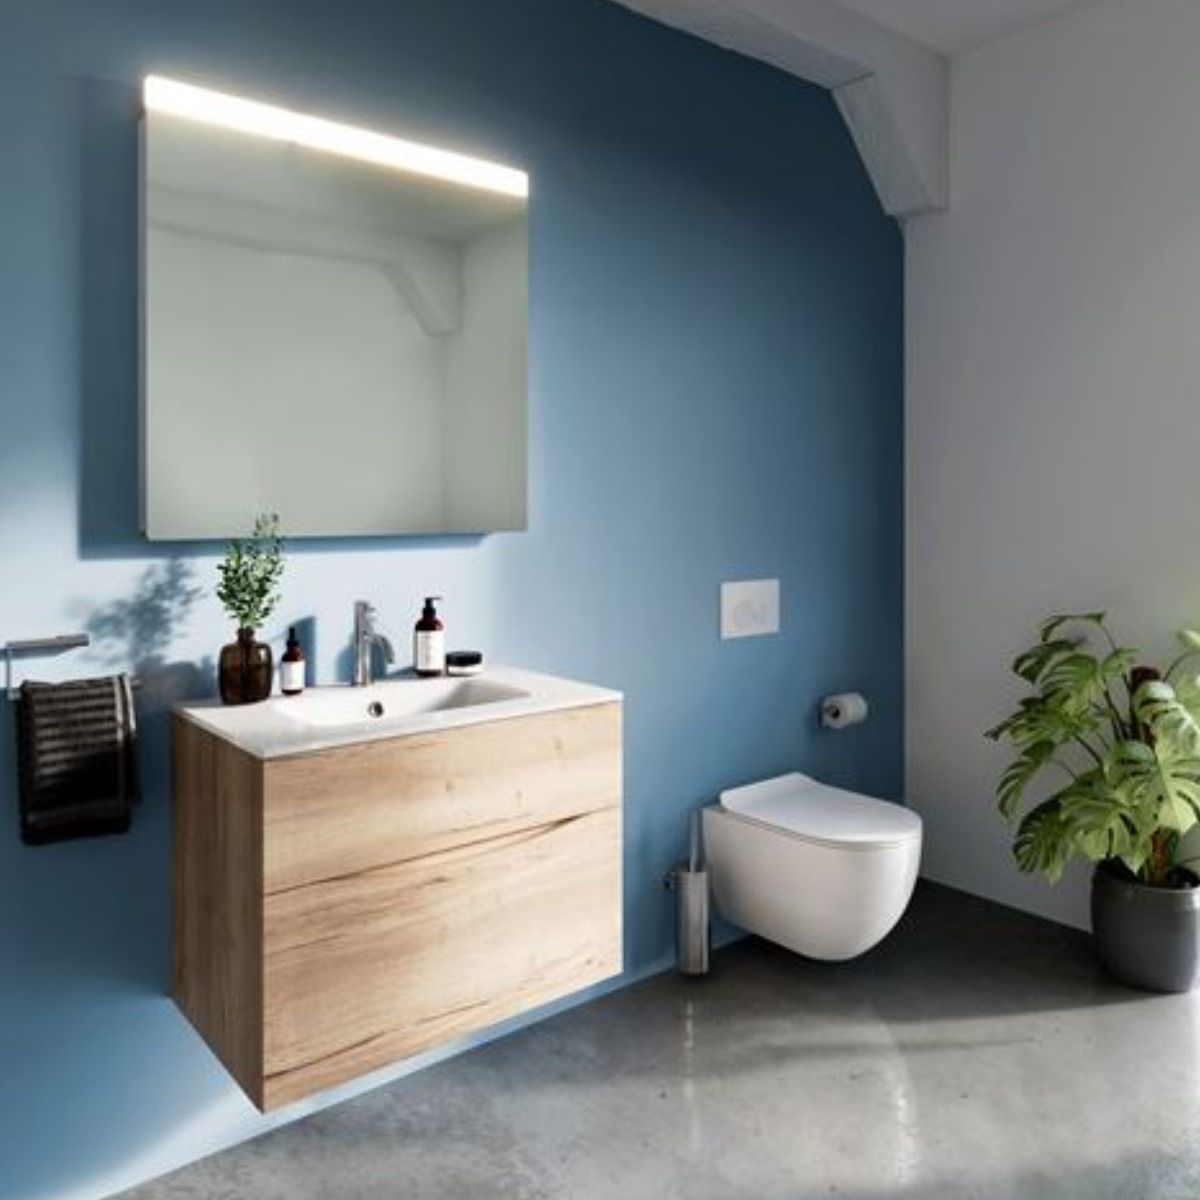 VeeBath Sobek Minimalist High Gloss White 1000mm Vanity Sink Unit with Waterfall Designer Chrome Basin Mixer Tap Waste